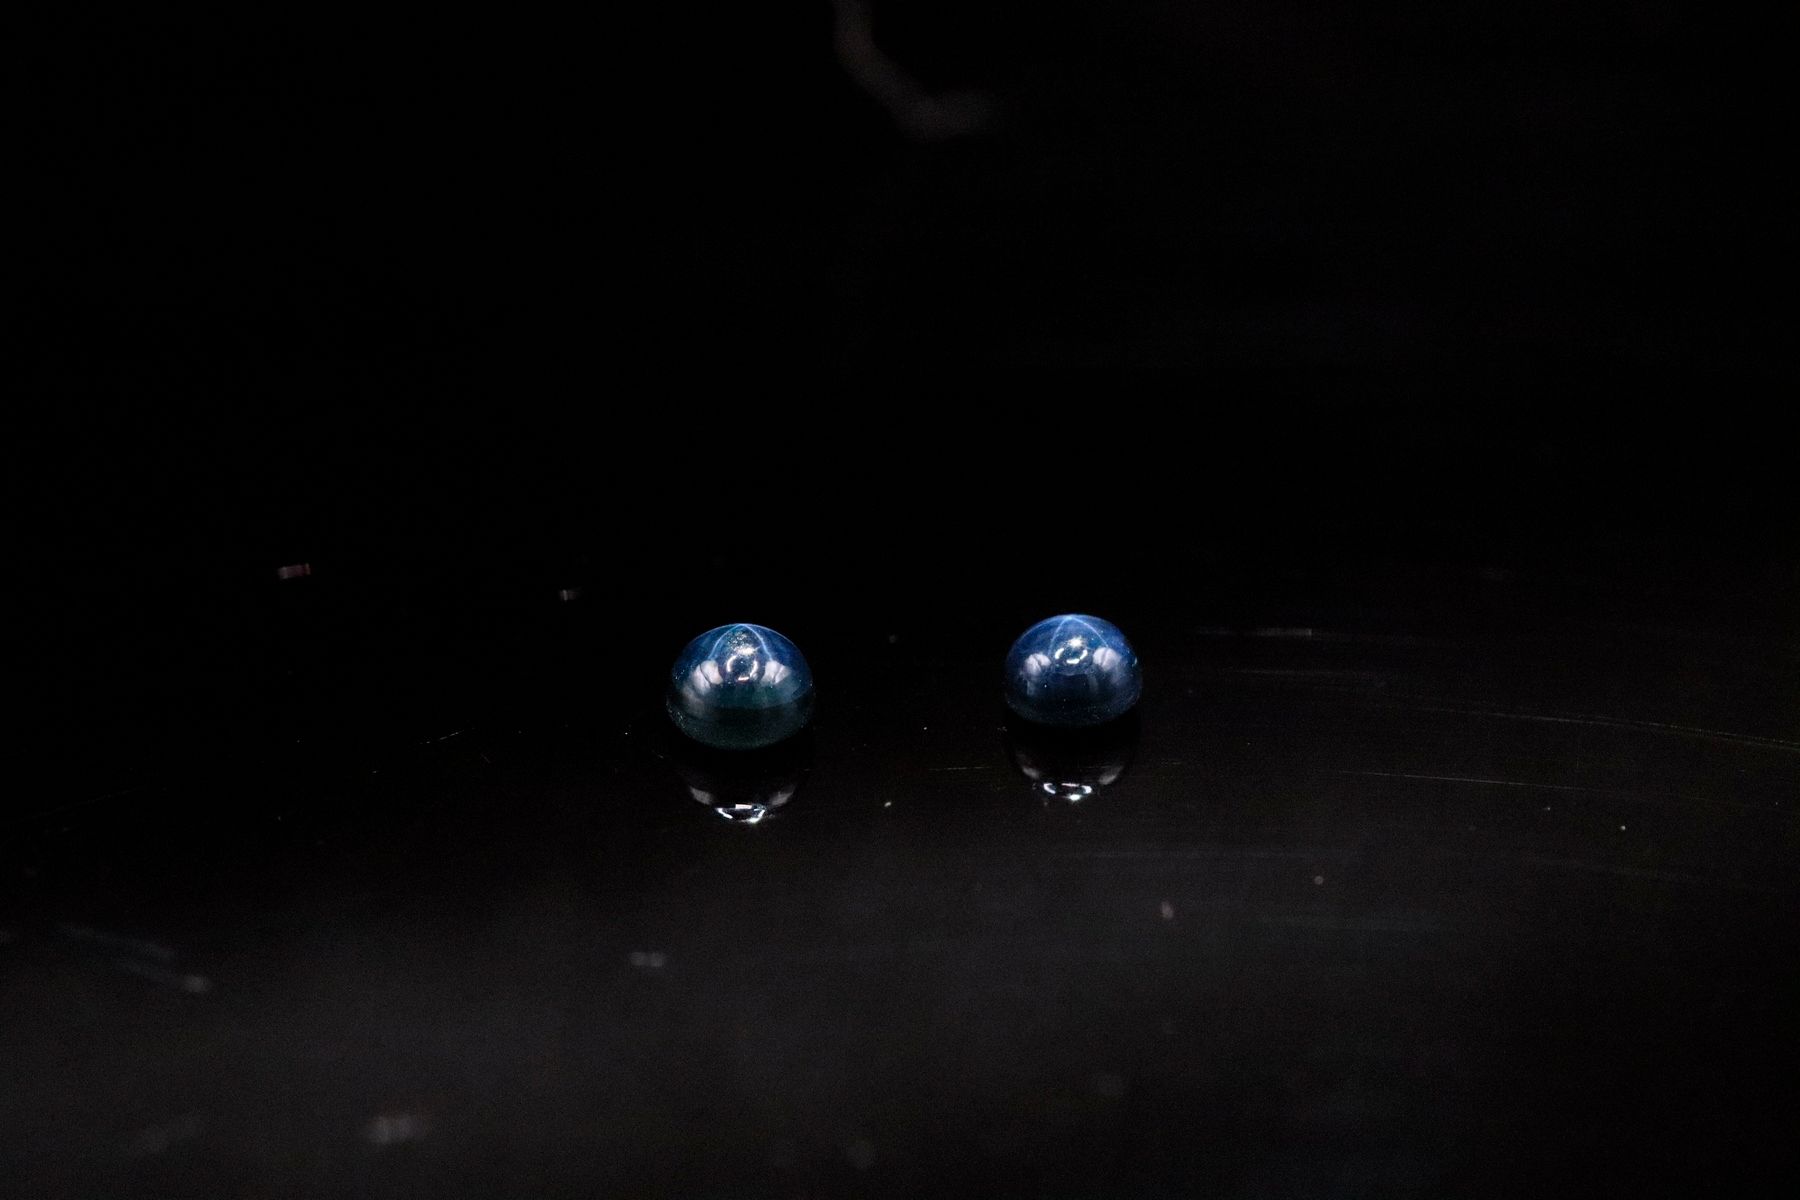 Null 一对美丽的圆形凸圆形星形蓝宝石，镶嵌在纸上。
重量：1.04 克拉

平均直径：4 毫米 - 4.5 毫米